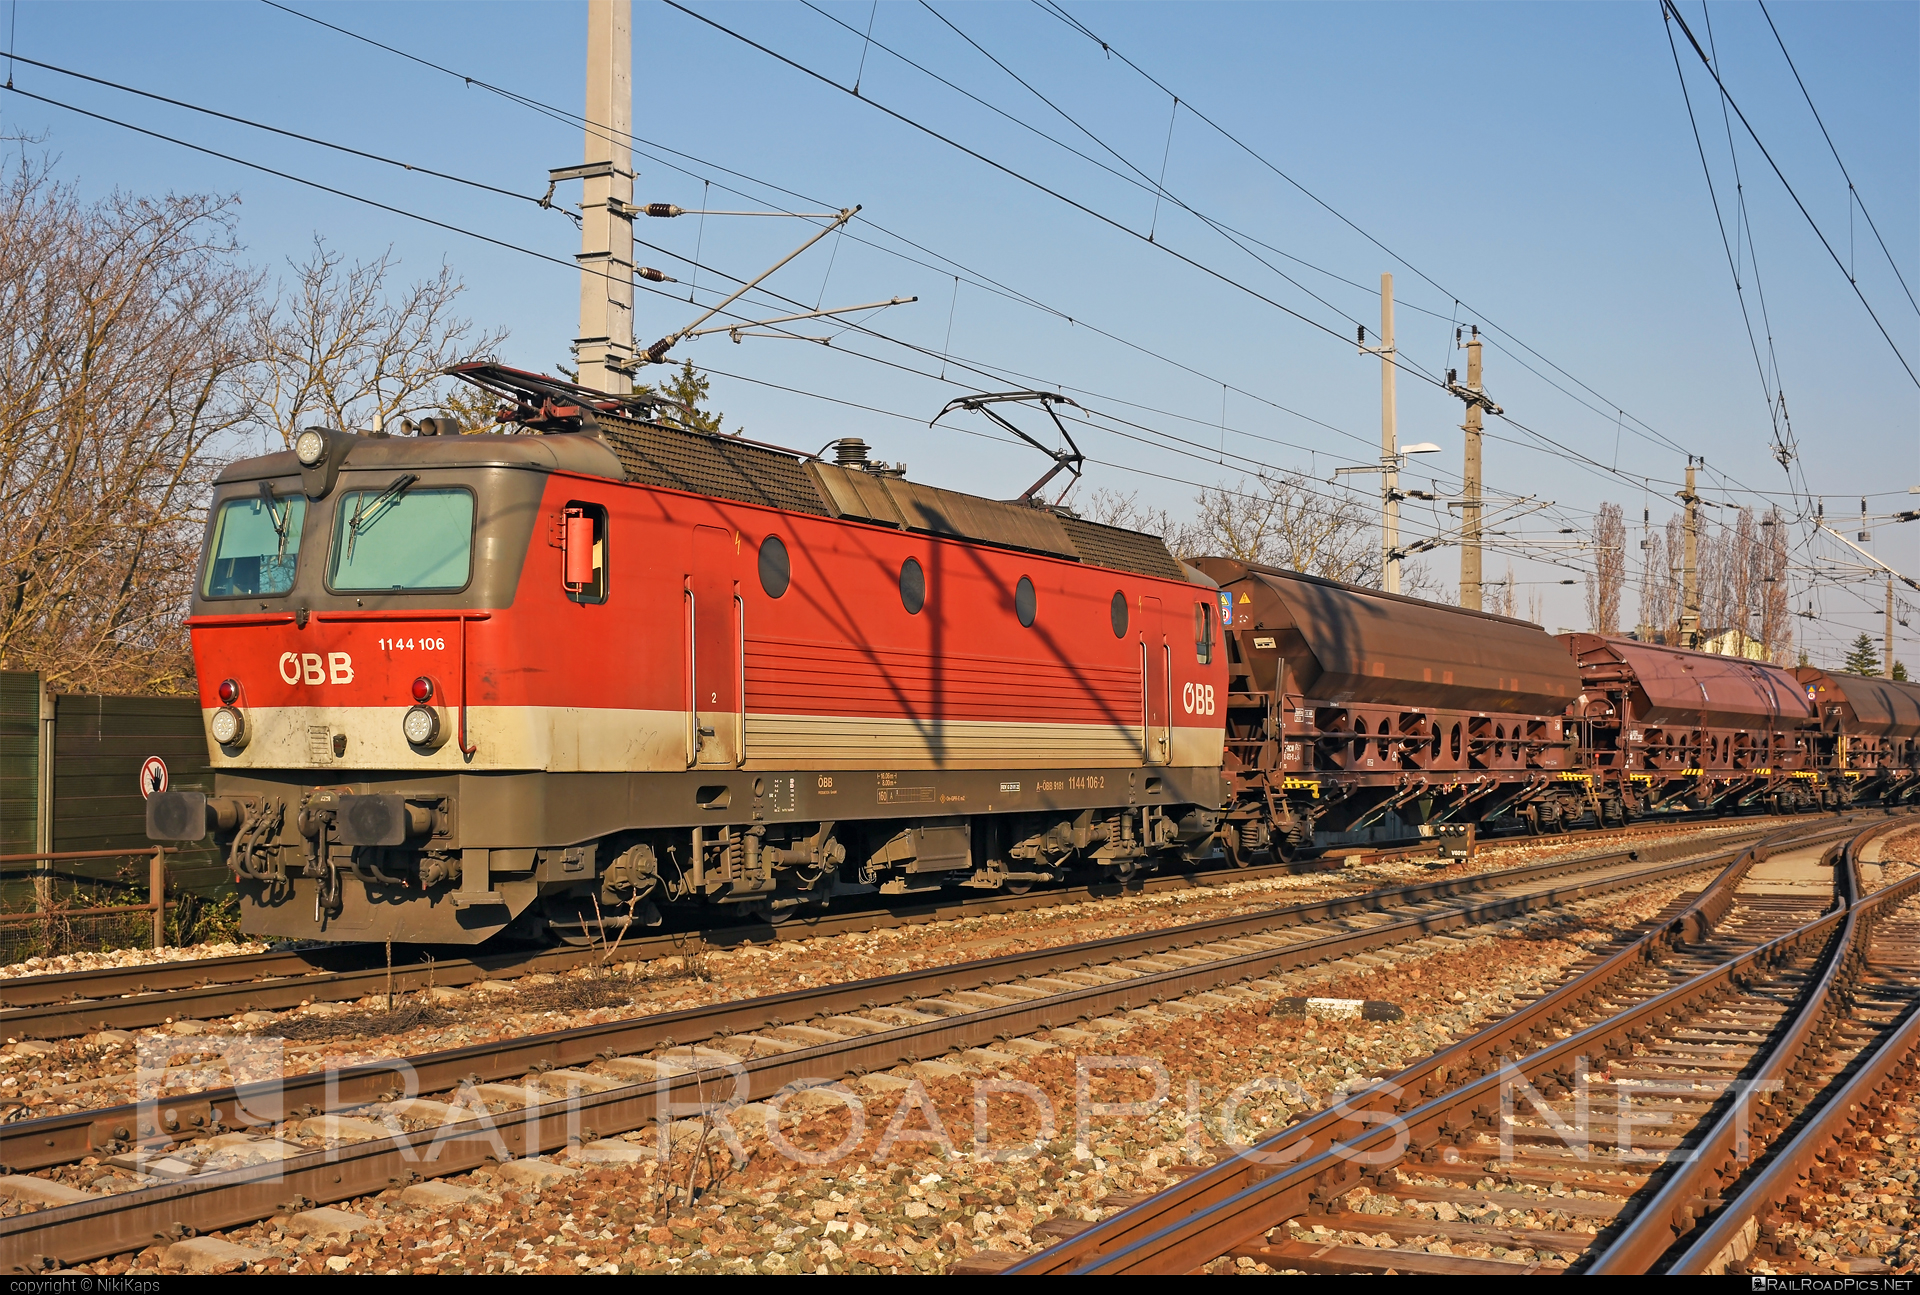 SGP 1144 - 1144 106 operated by Rail Cargo Austria AG #hopperwagon #obb #obb1144 #obbClass1144 #osterreichischebundesbahnen #rcw #sgp #sgp1144 #simmeringgrazpauker